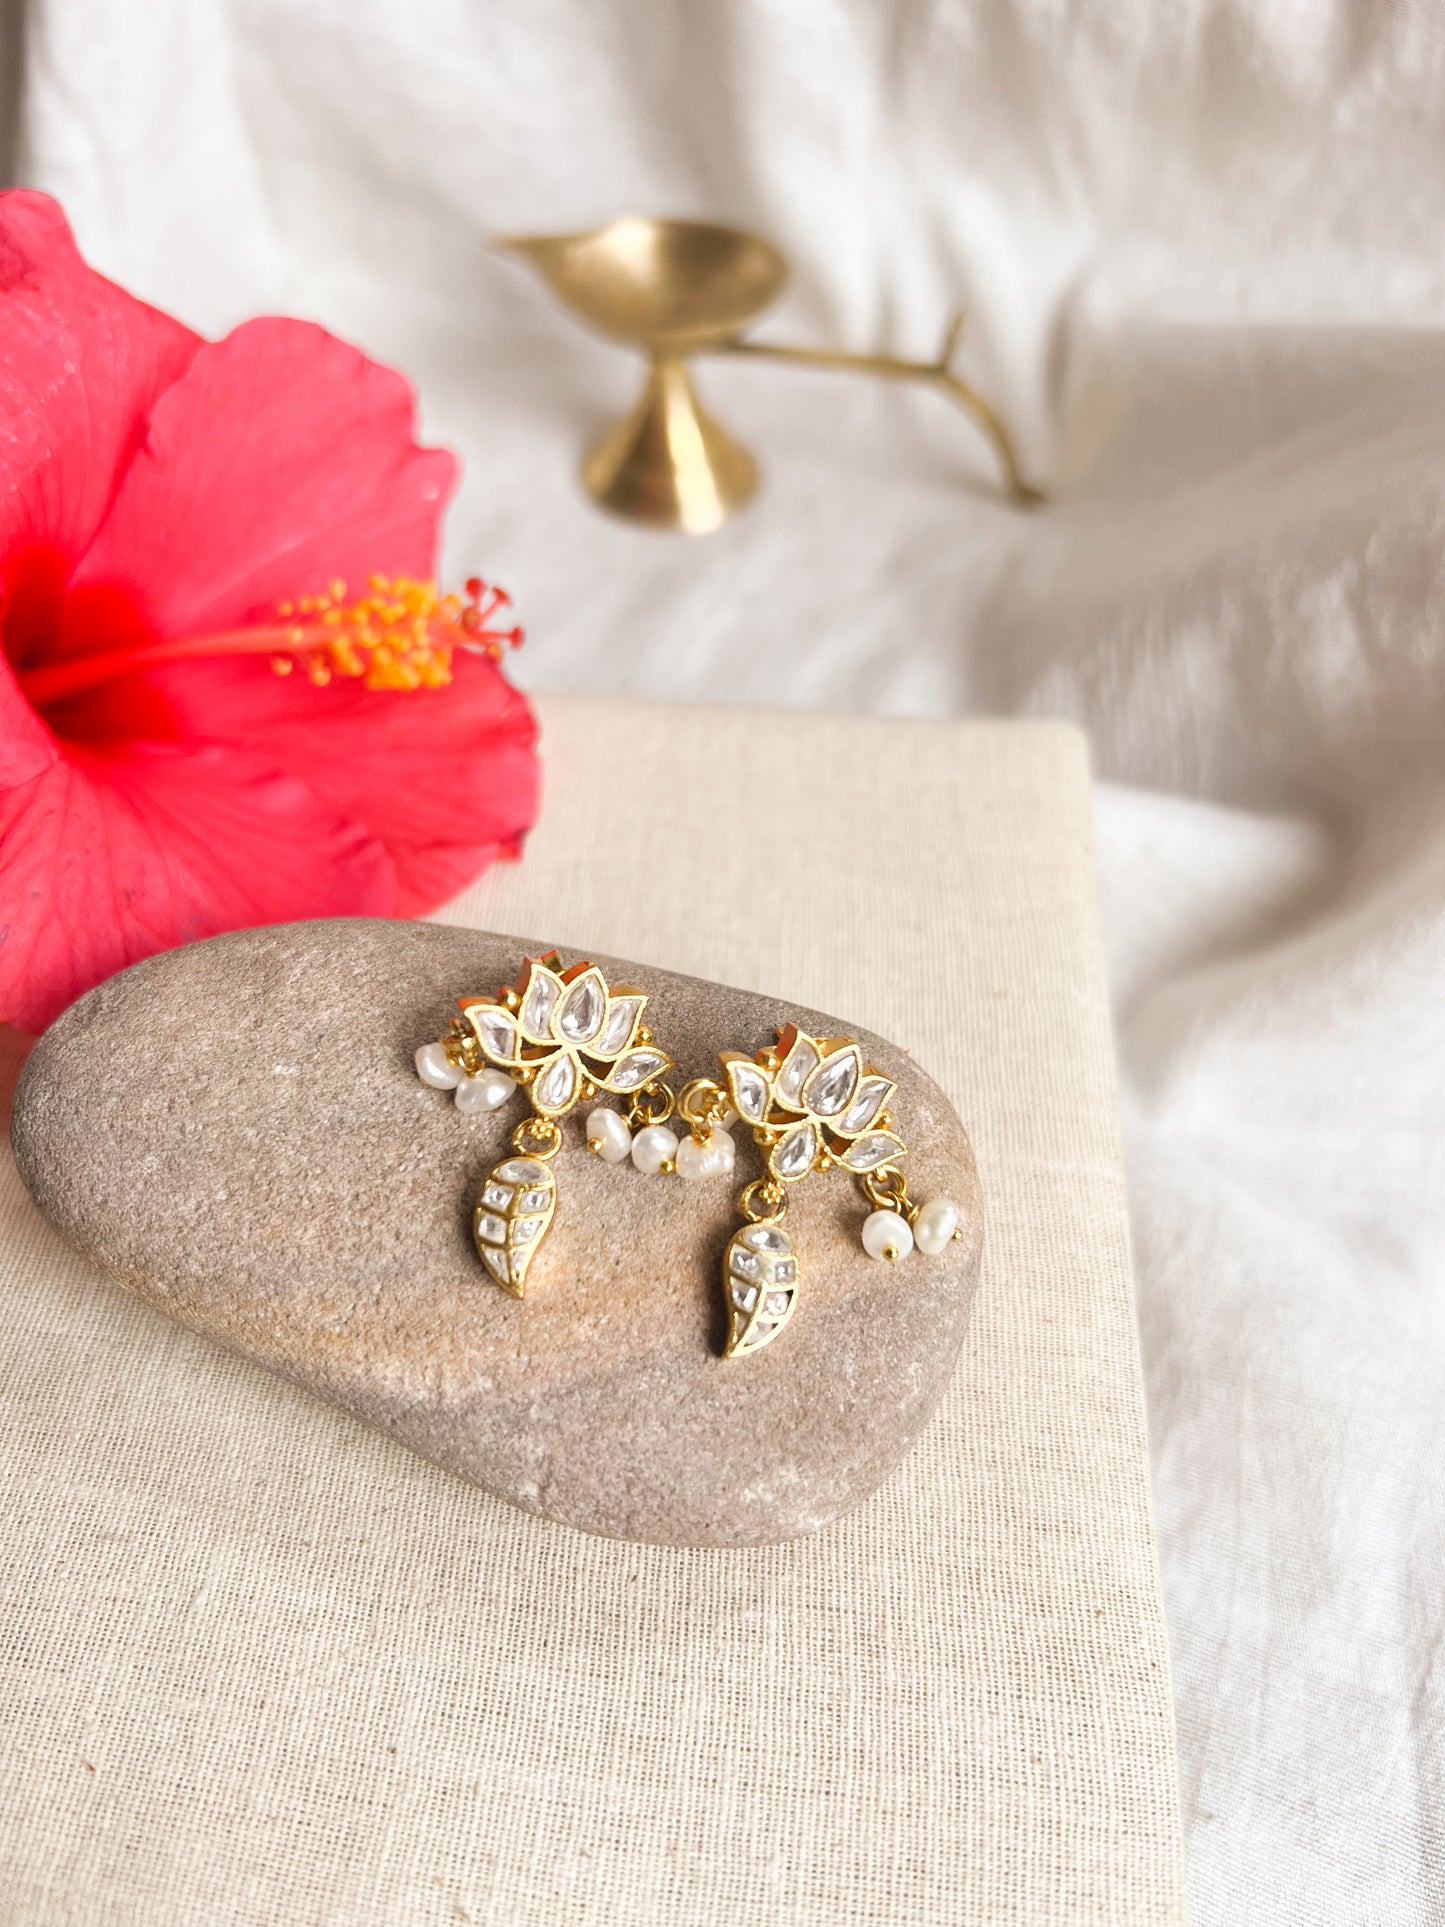 Shakti kundan earring with gold plating on silver